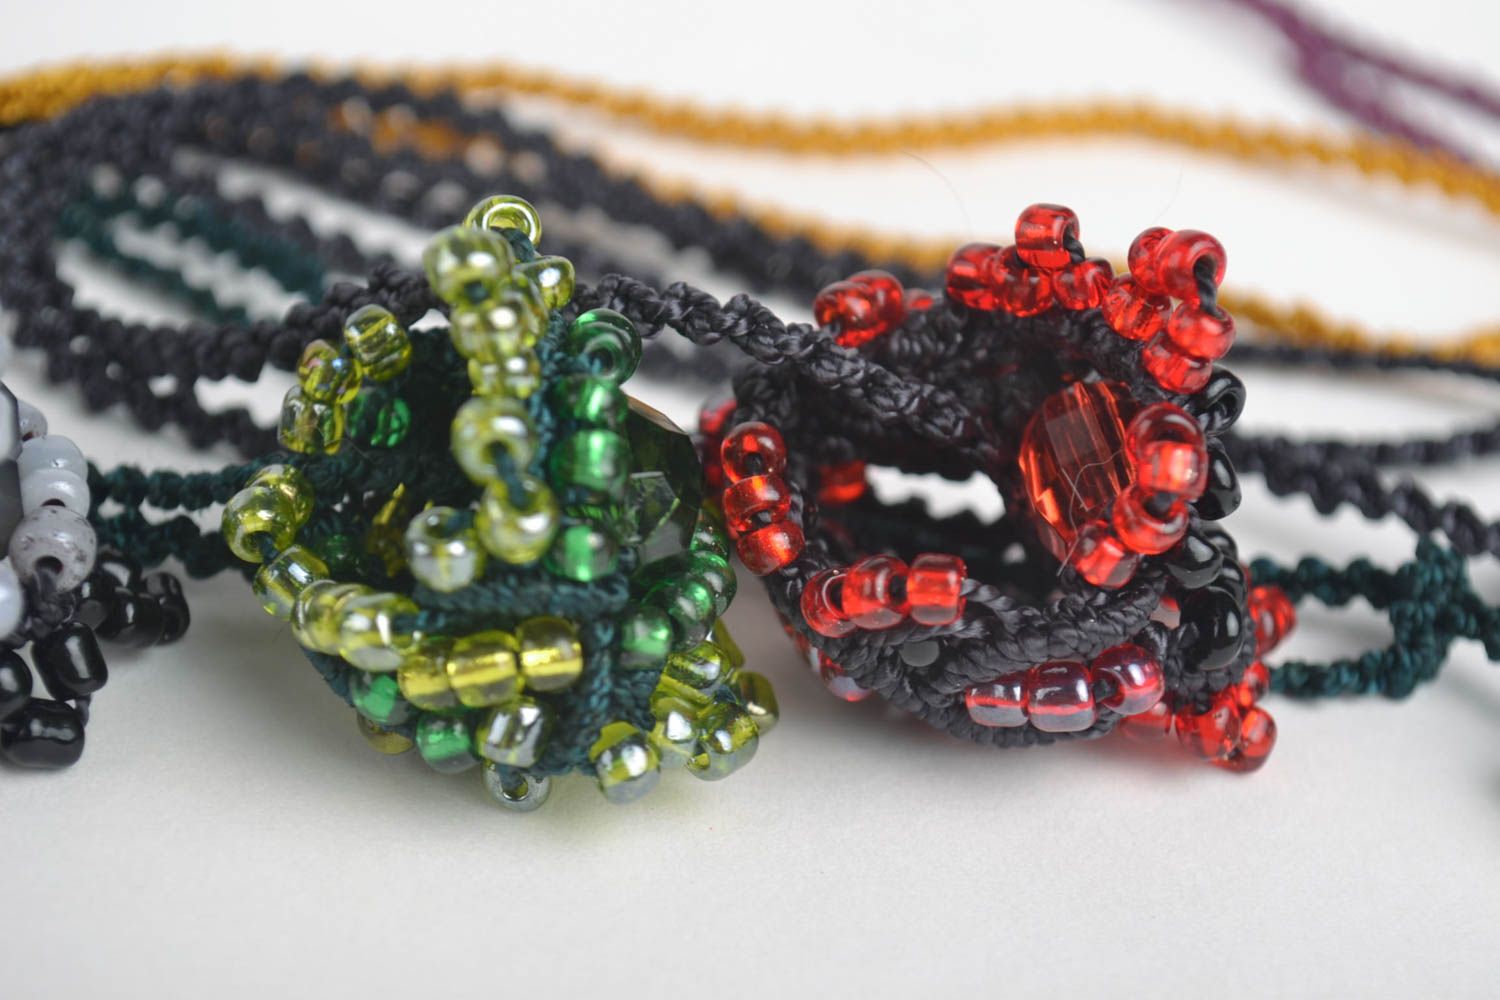 Handmade pendant designer pendant beads pendant macrame pendant set of 5 items photo 4